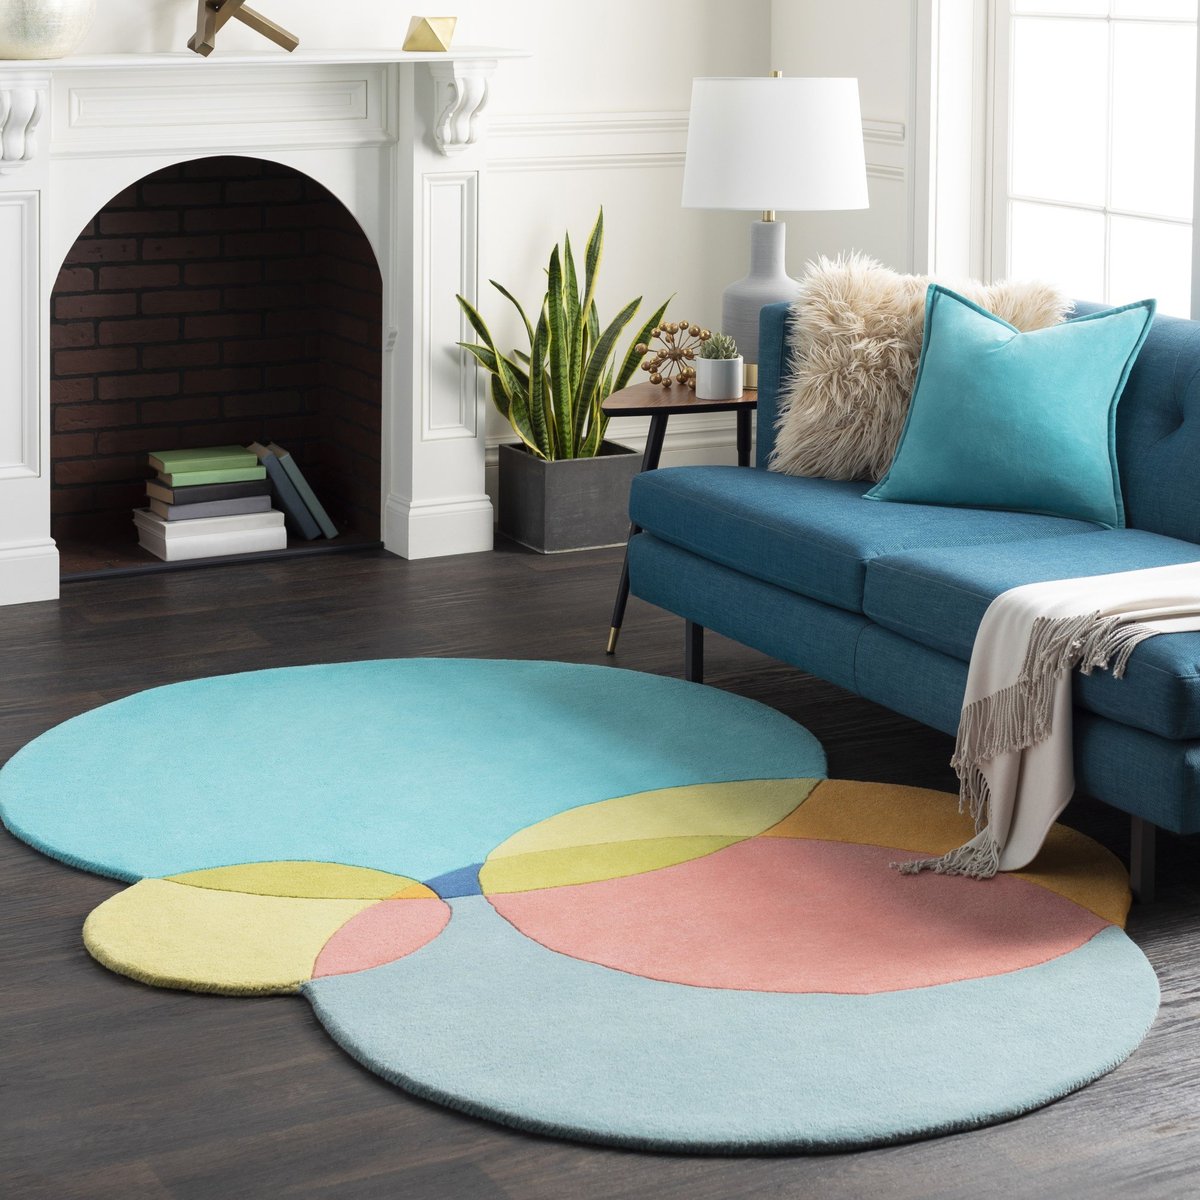 Playful Colors - Blue Living Room Decor Ideas